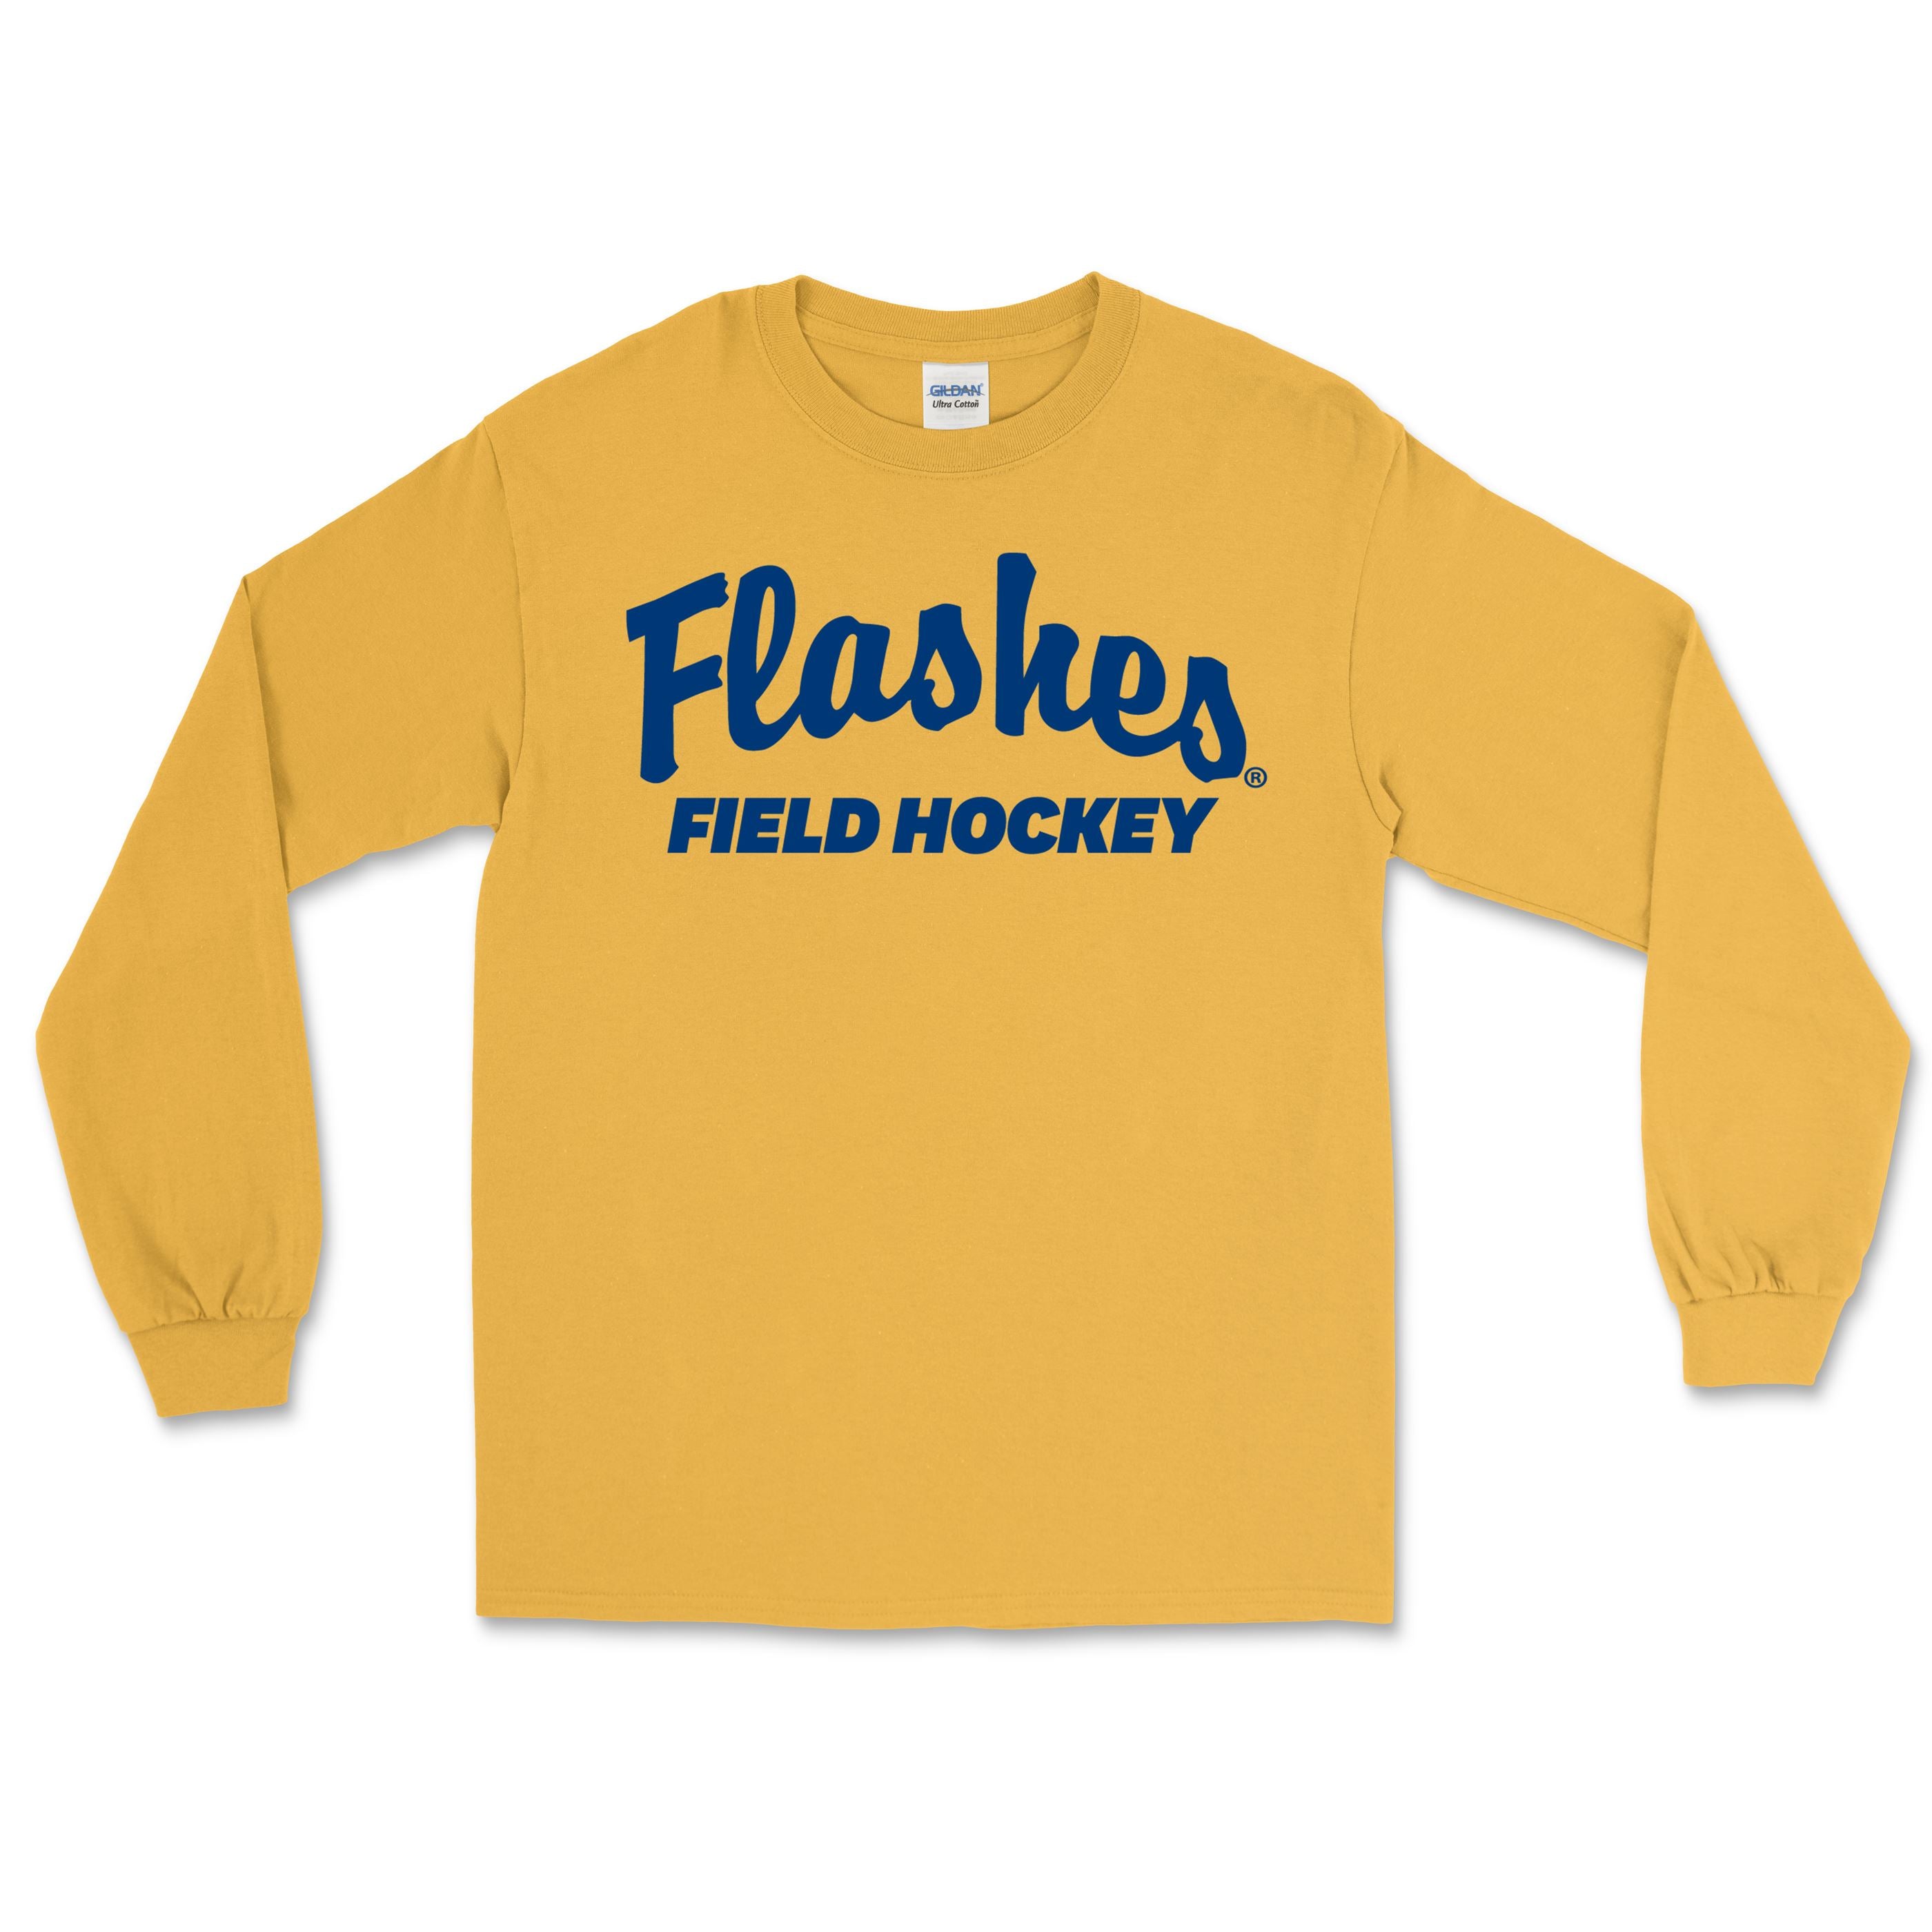 Kent State Gold Field Hockey Long Sleeve T-Shirt